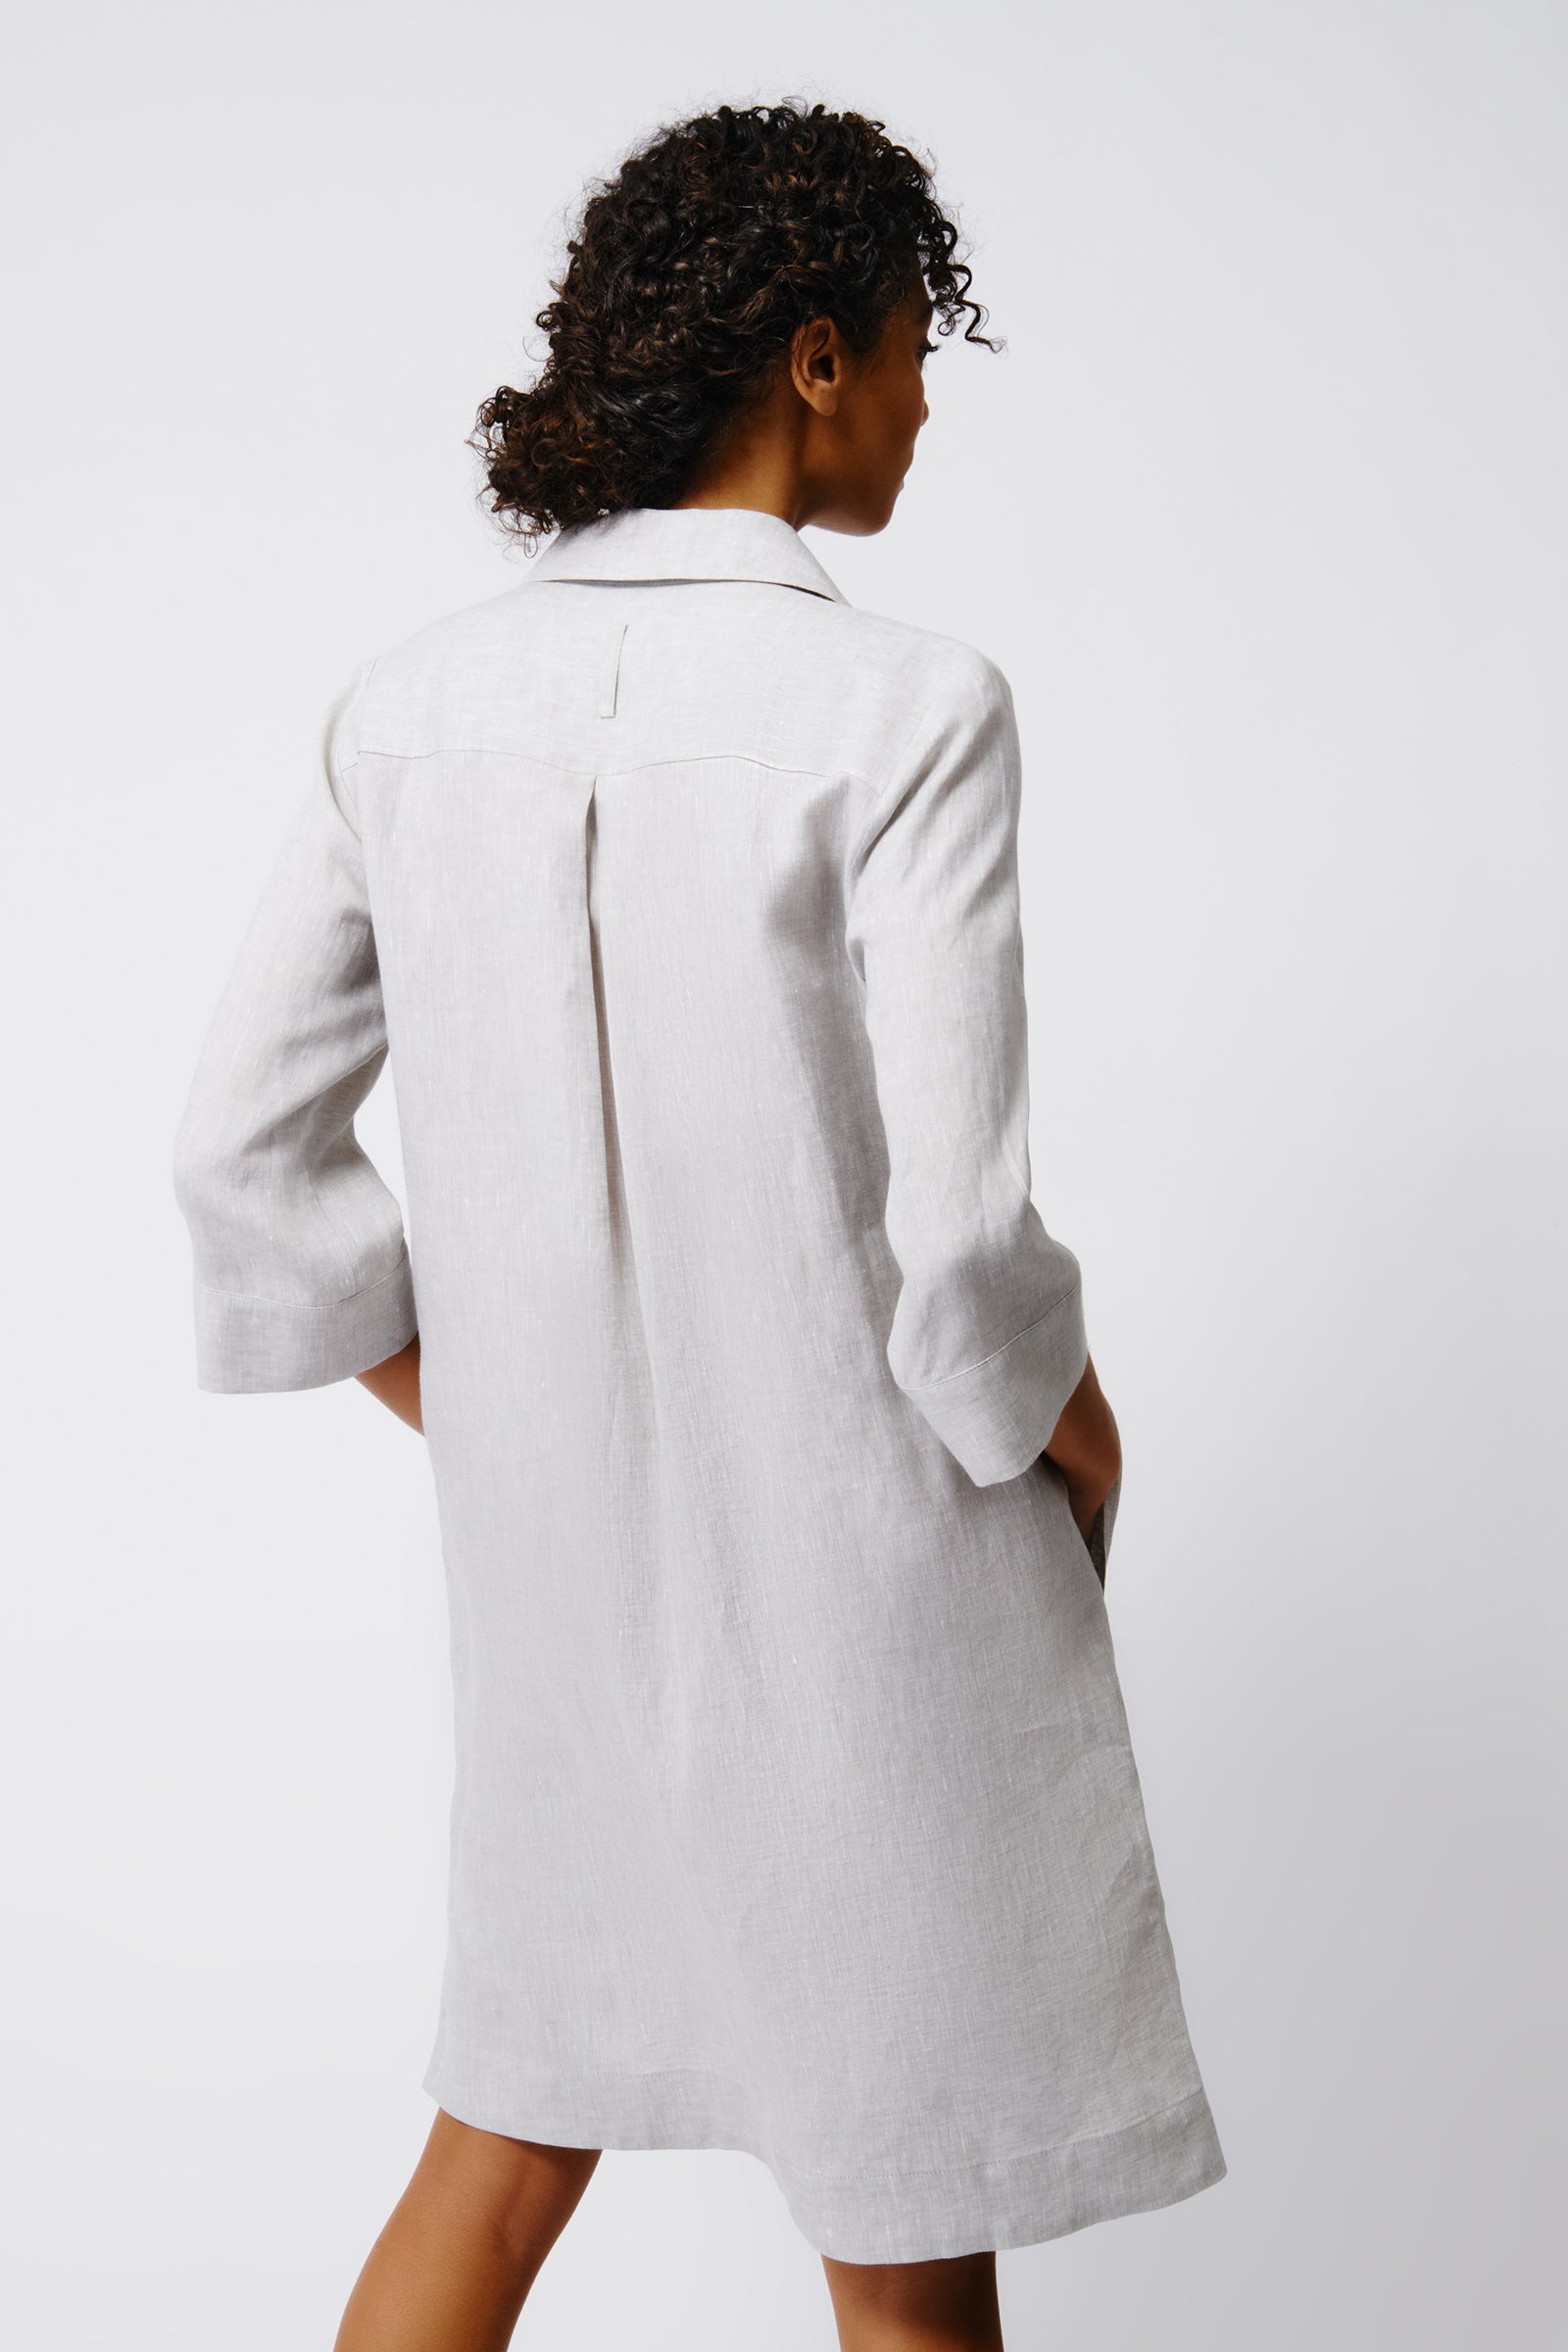 Kal Rieman Rene Button Placket Dress in Beige Linen on Model Full Front View